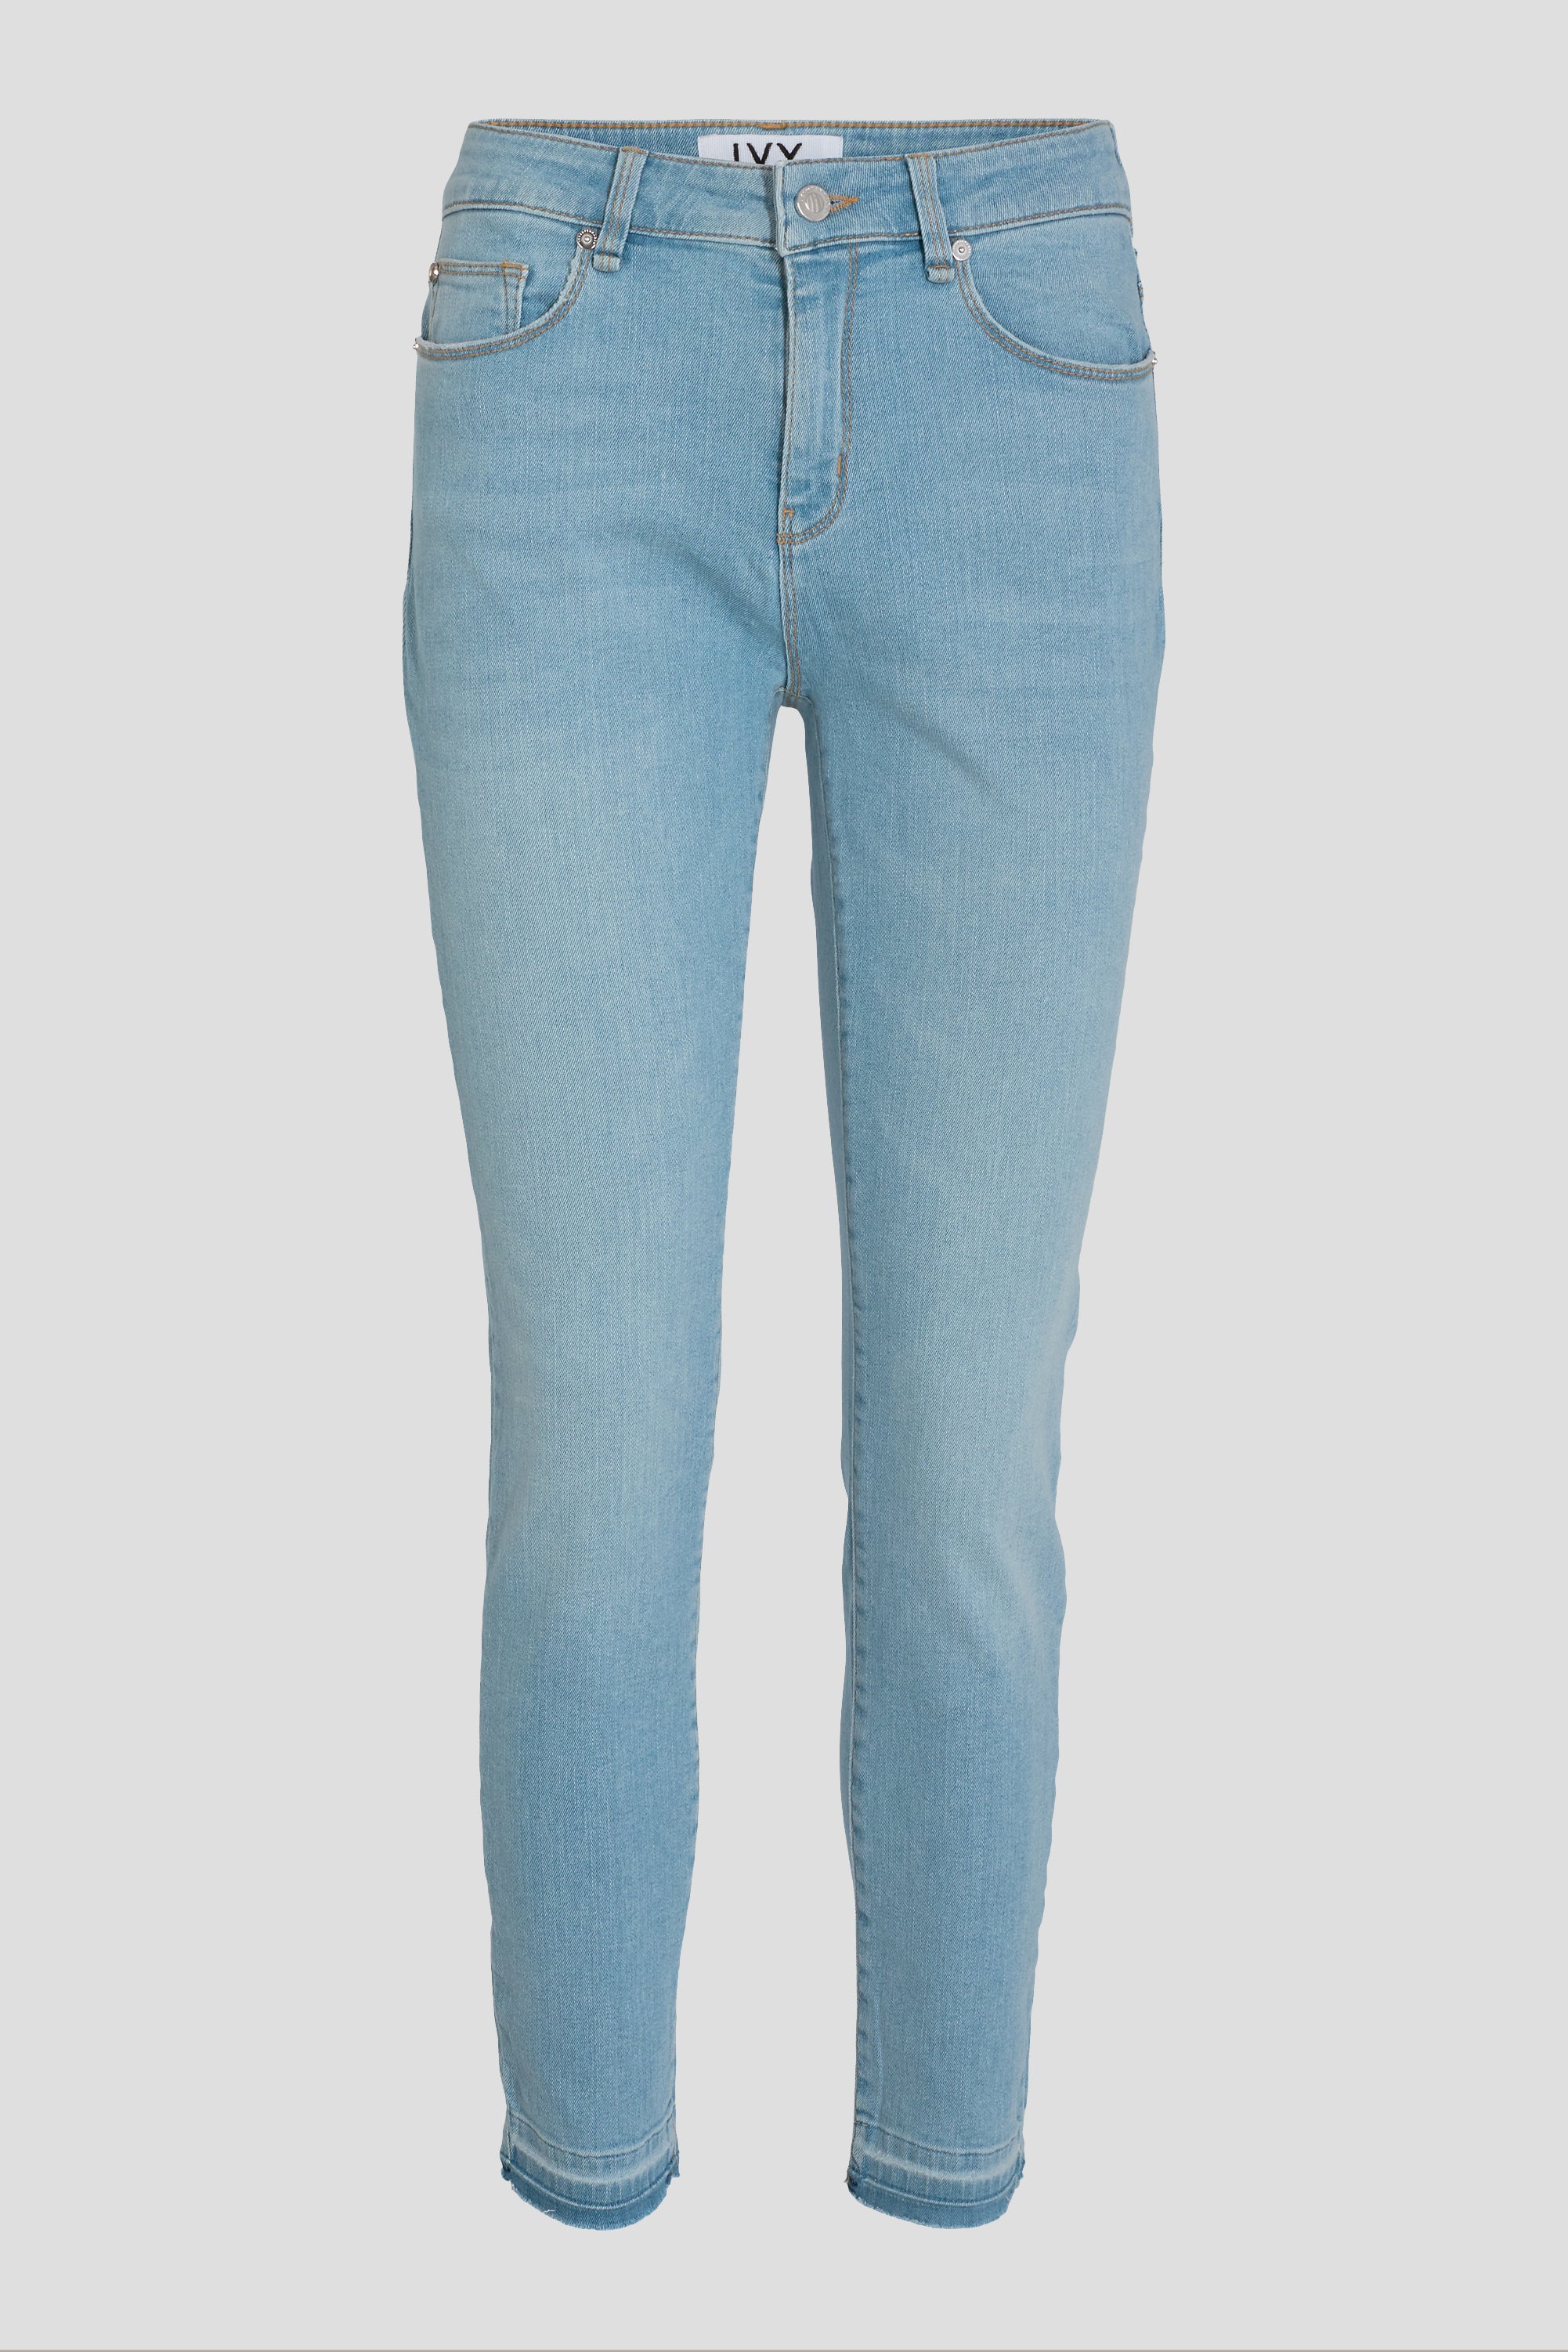 IVY Copenhagen IVY-Alexa Jeans Wash Fiji Jeans & Pants 51 Denim Blue